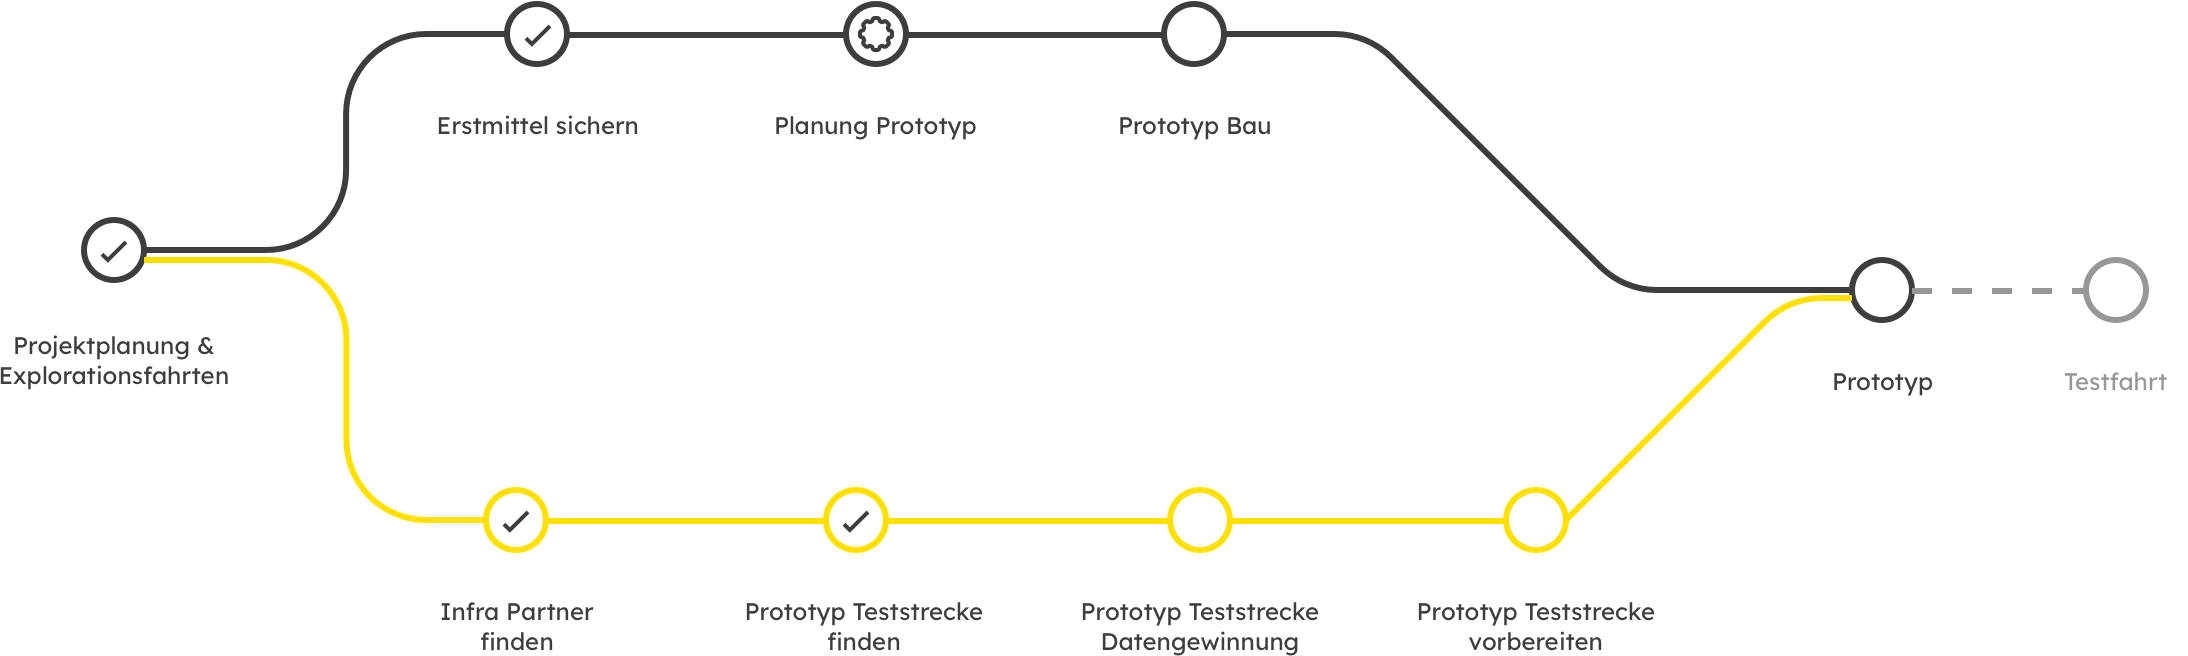 Railmap